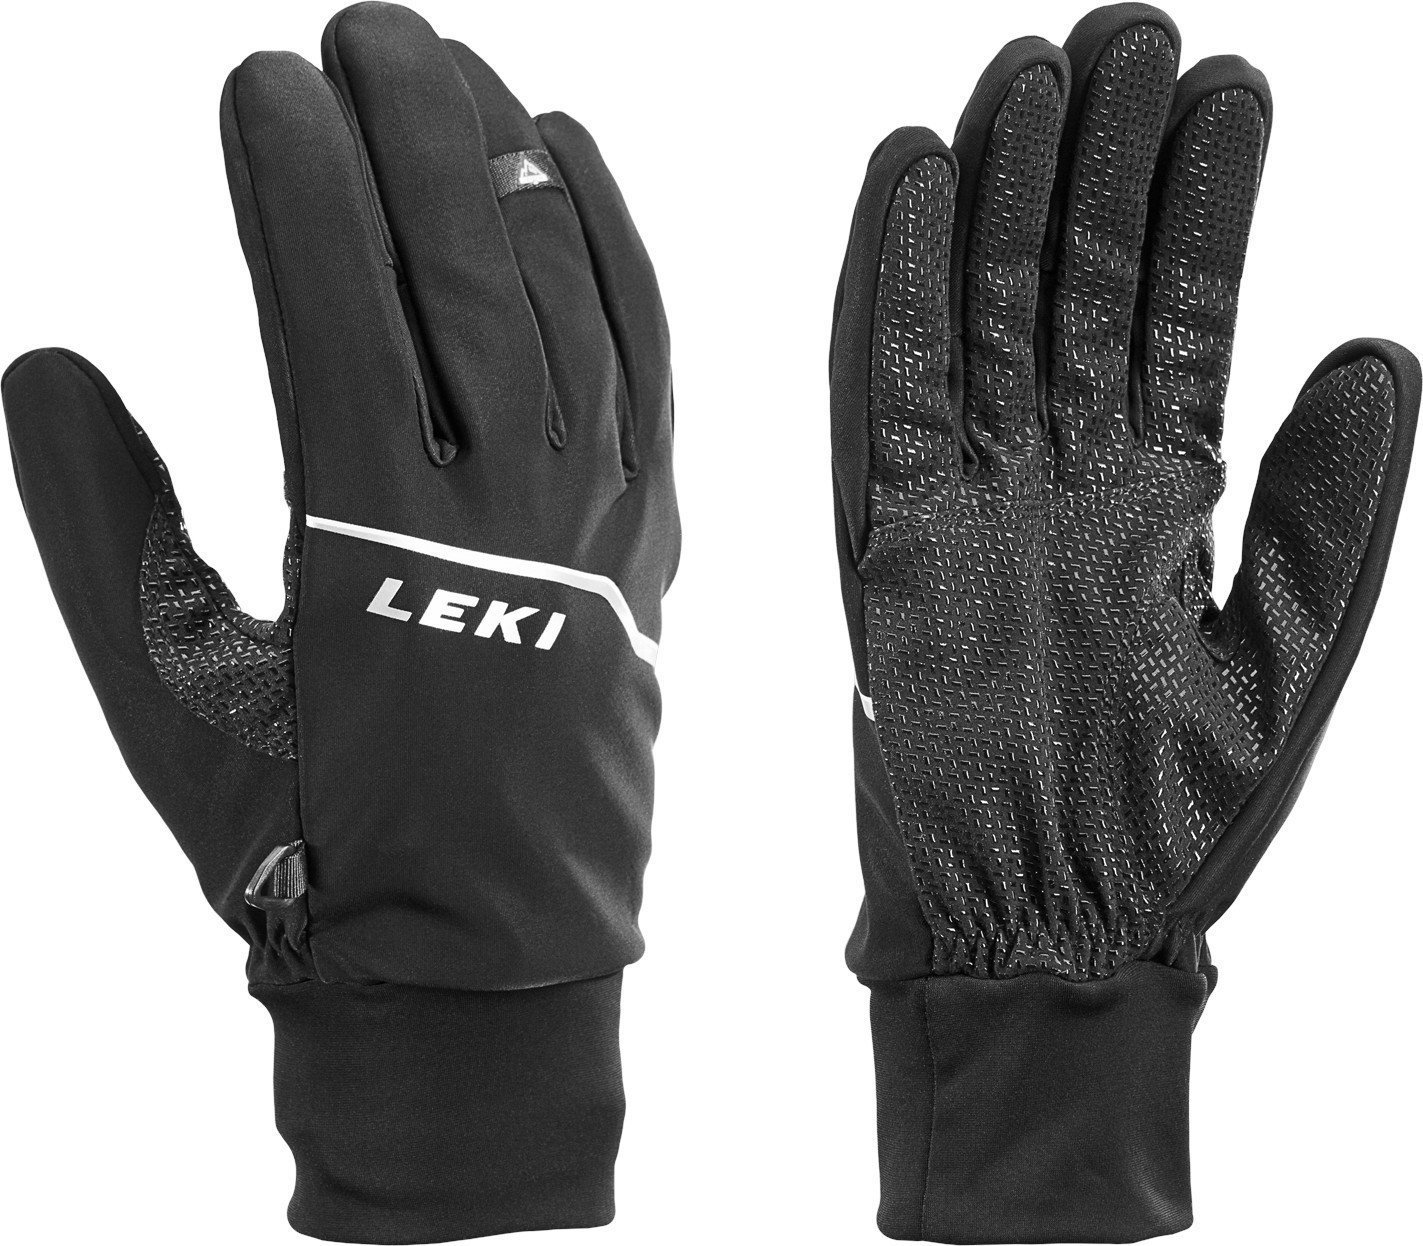 Handschuhe Leki Tour Lite Black/Chrome/White 9 Handschuhe